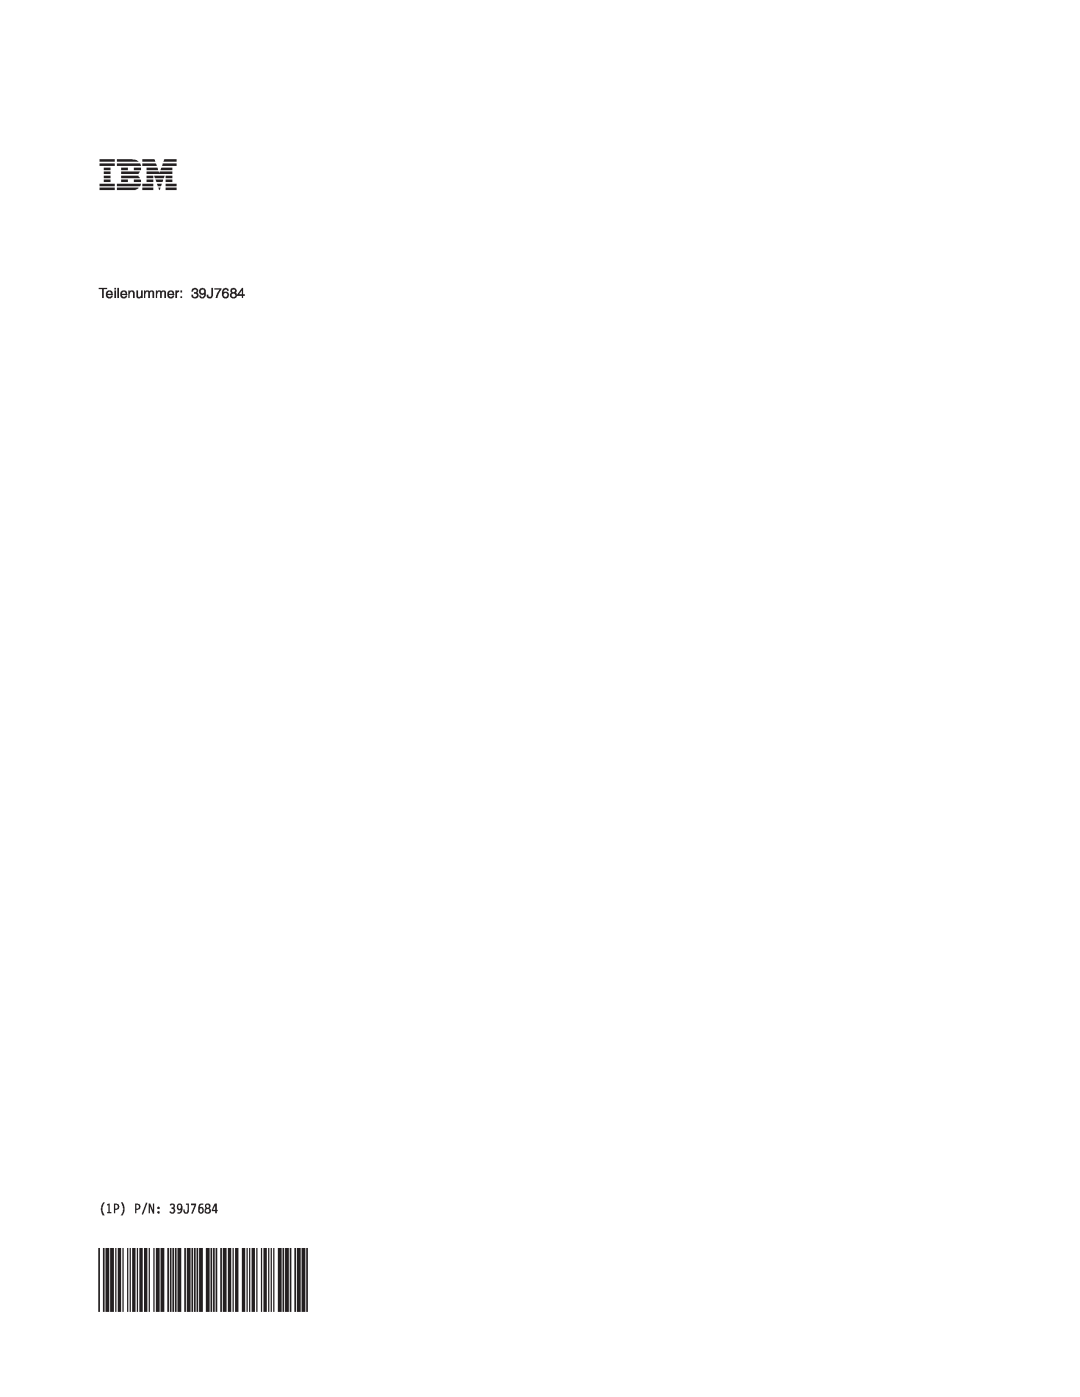 IBM 9212, 9213 manual Teilenummer 39J7684, 1P P/N 39J7684 